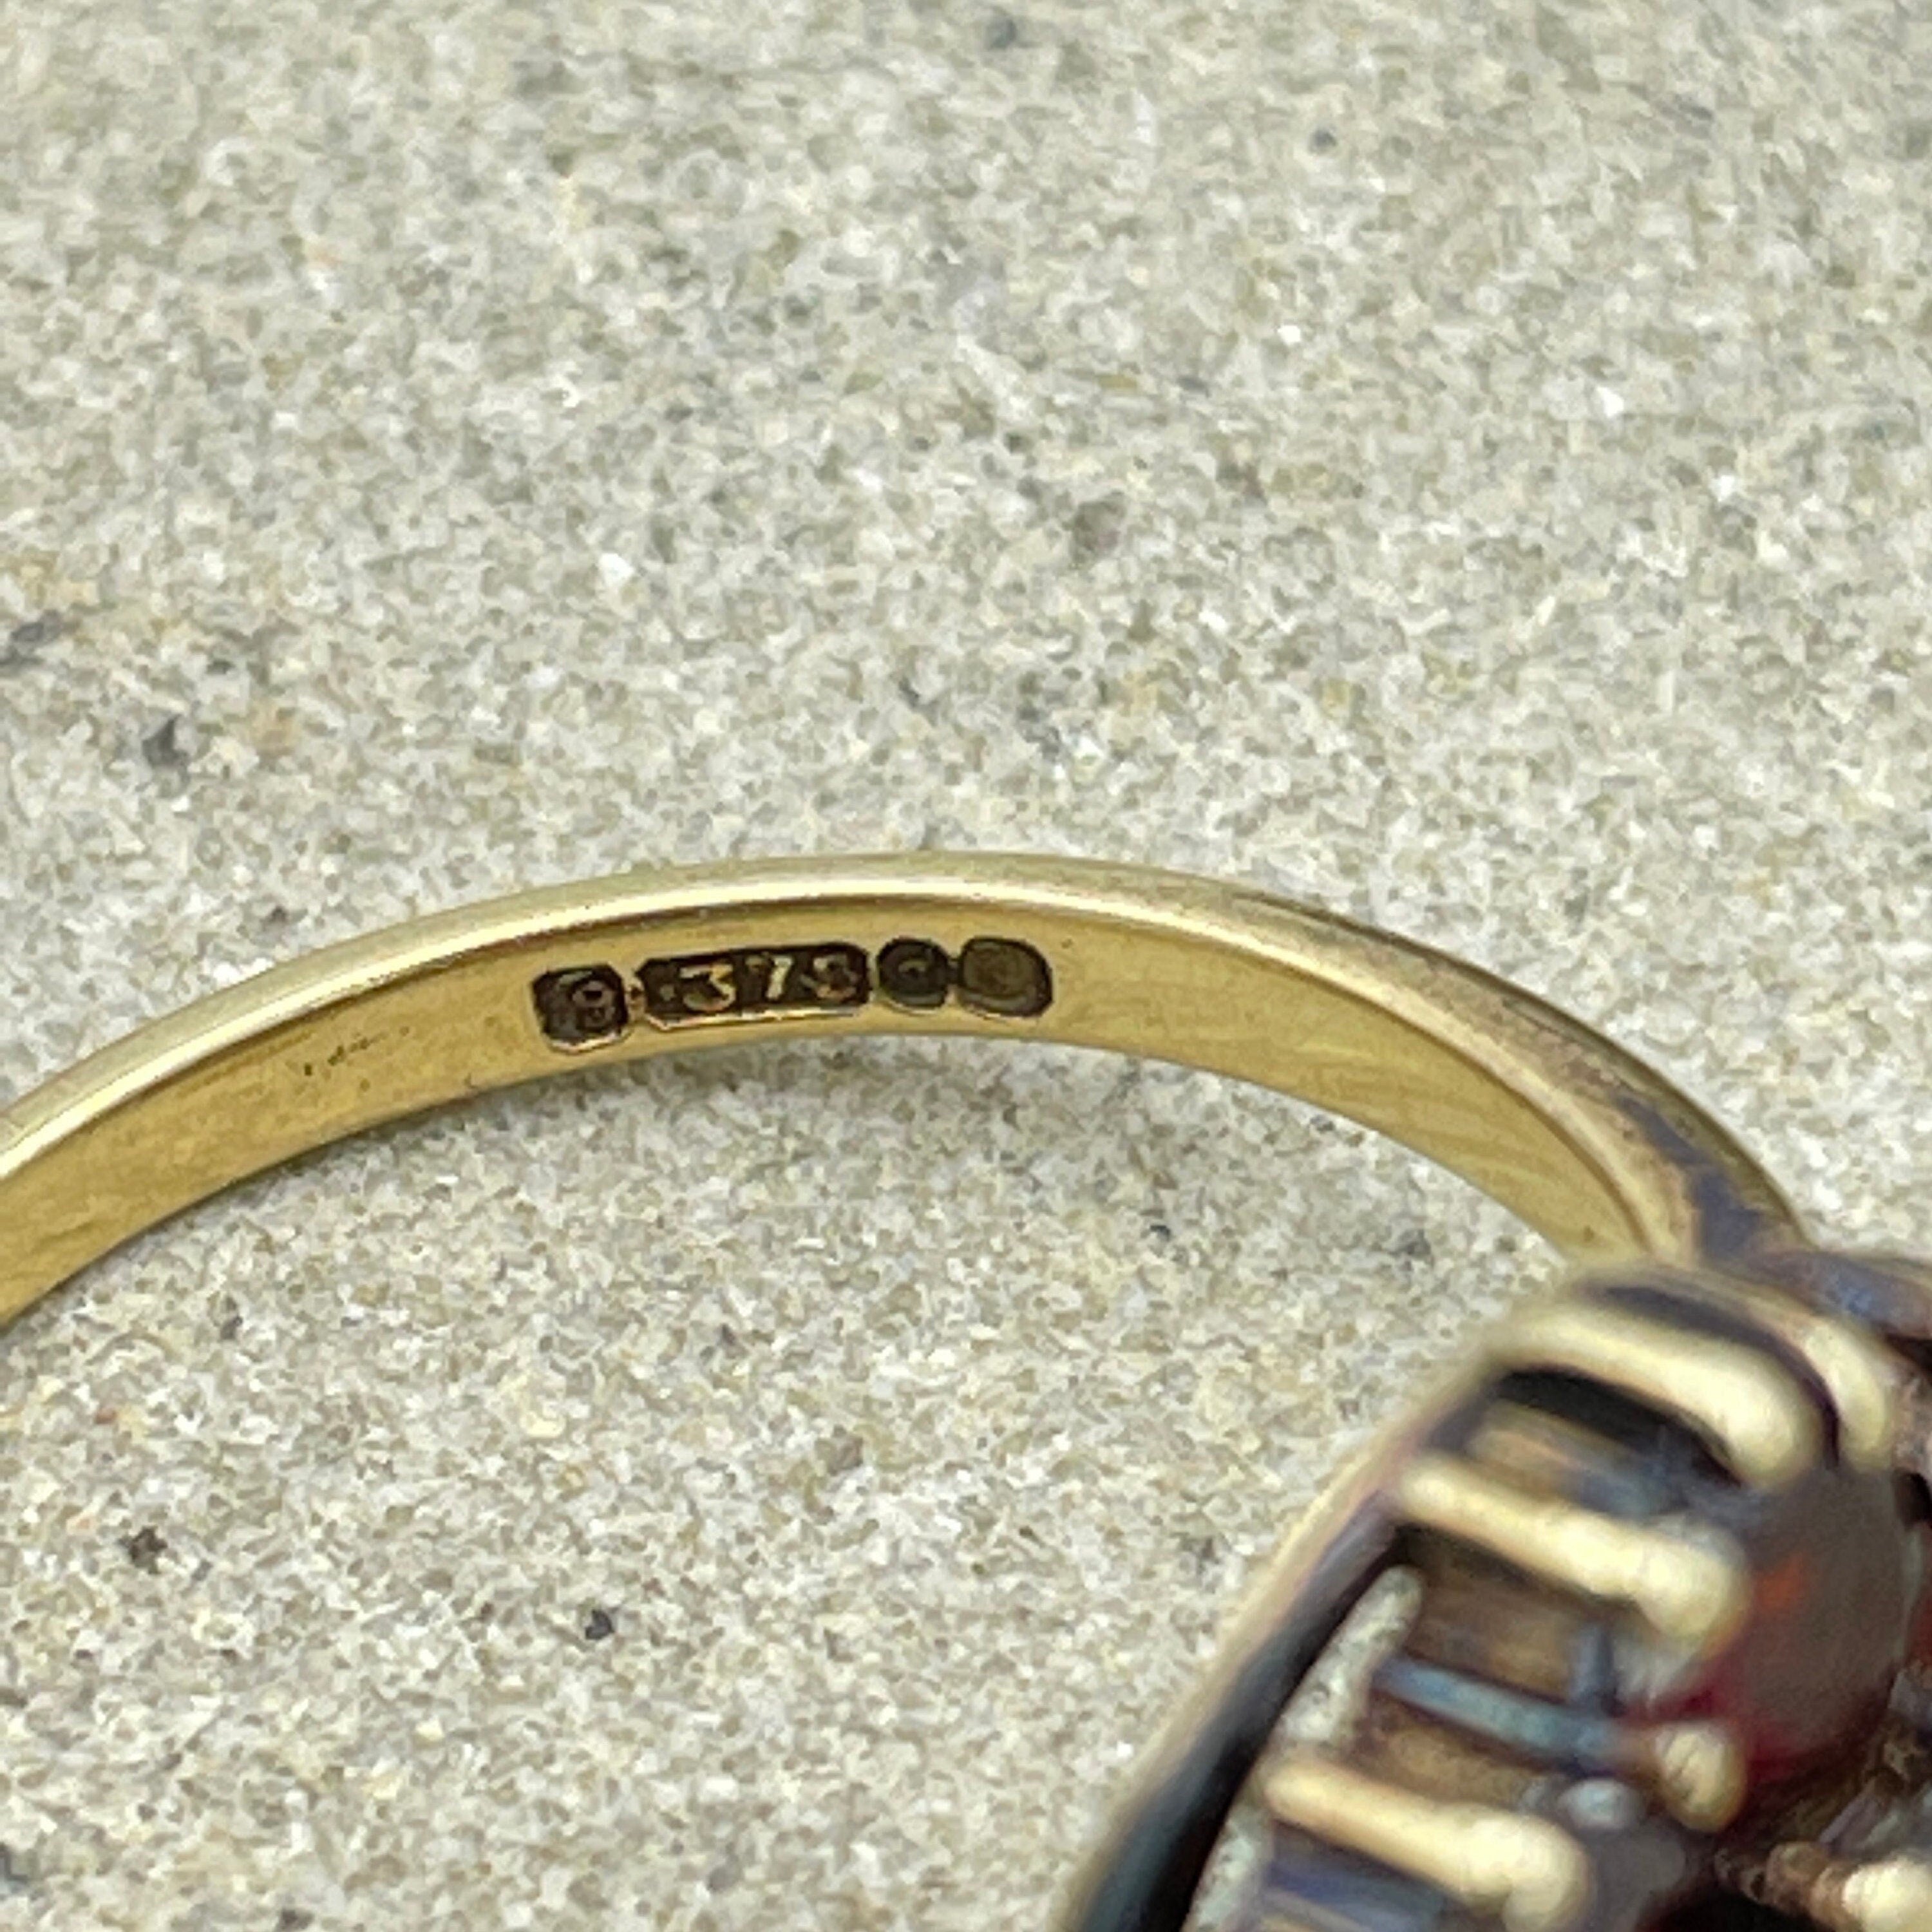 Vintage 1950s 9ct gold garnet cluster ring, hallmarked 1959